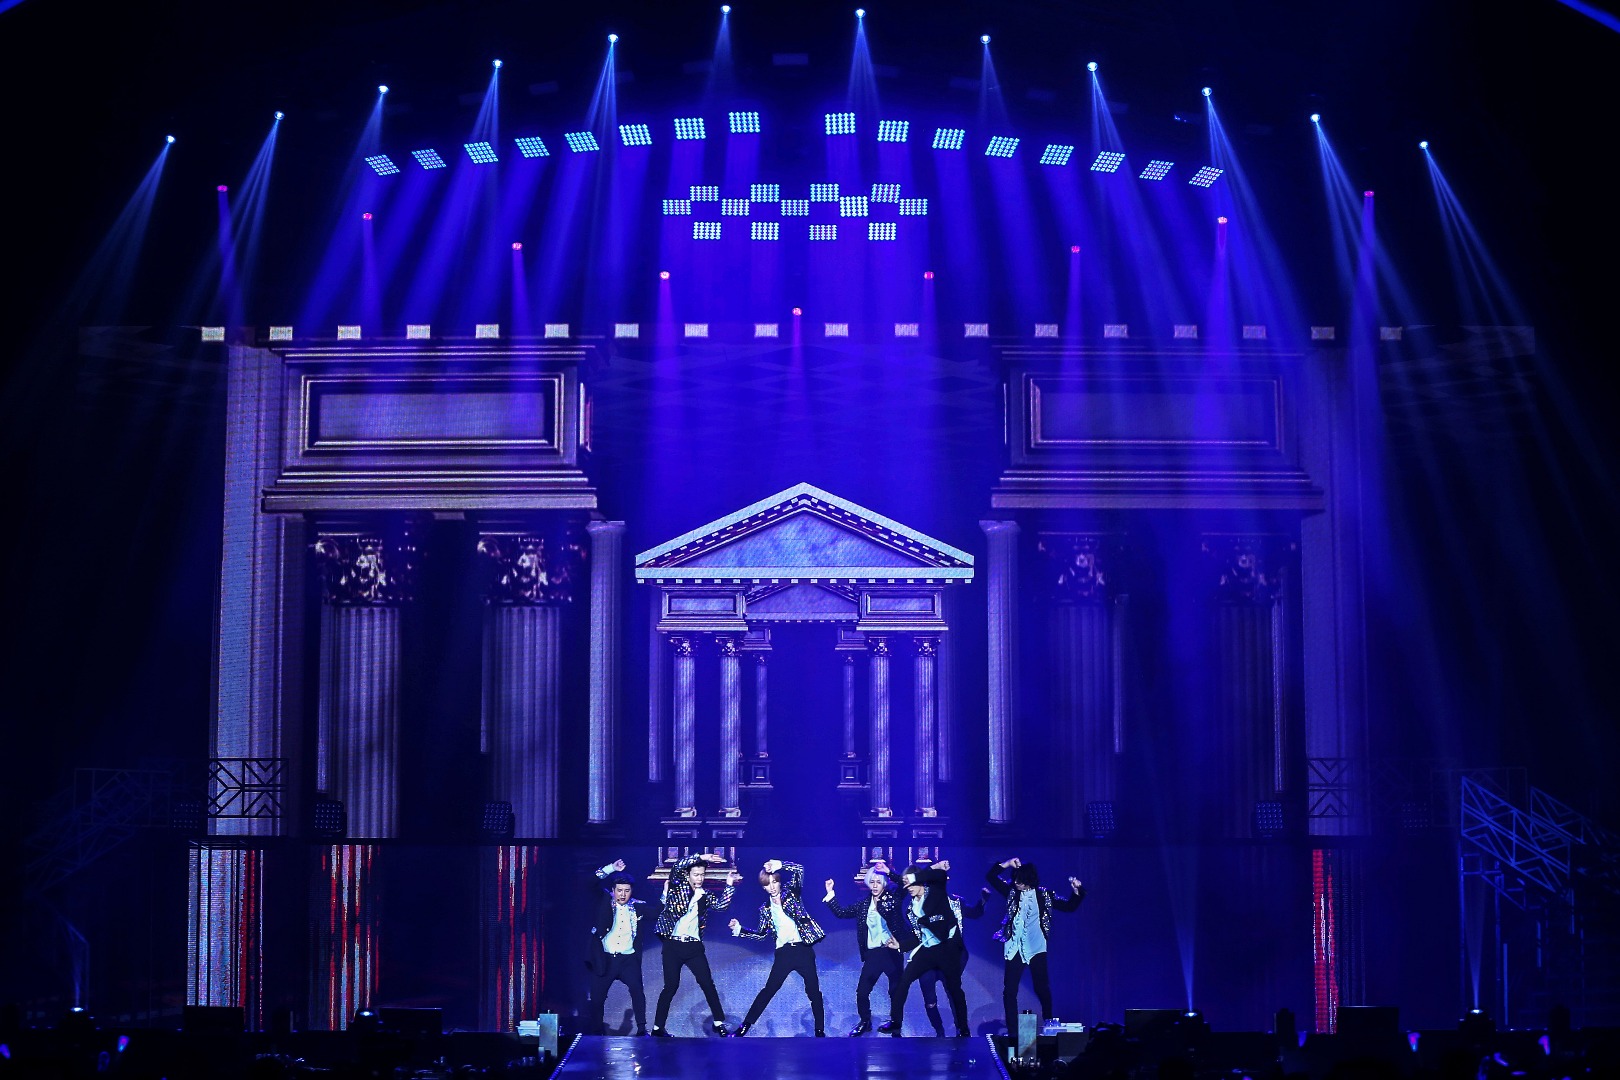 Super Junior World Tour “SUPER SHOW 7” in Bangkok